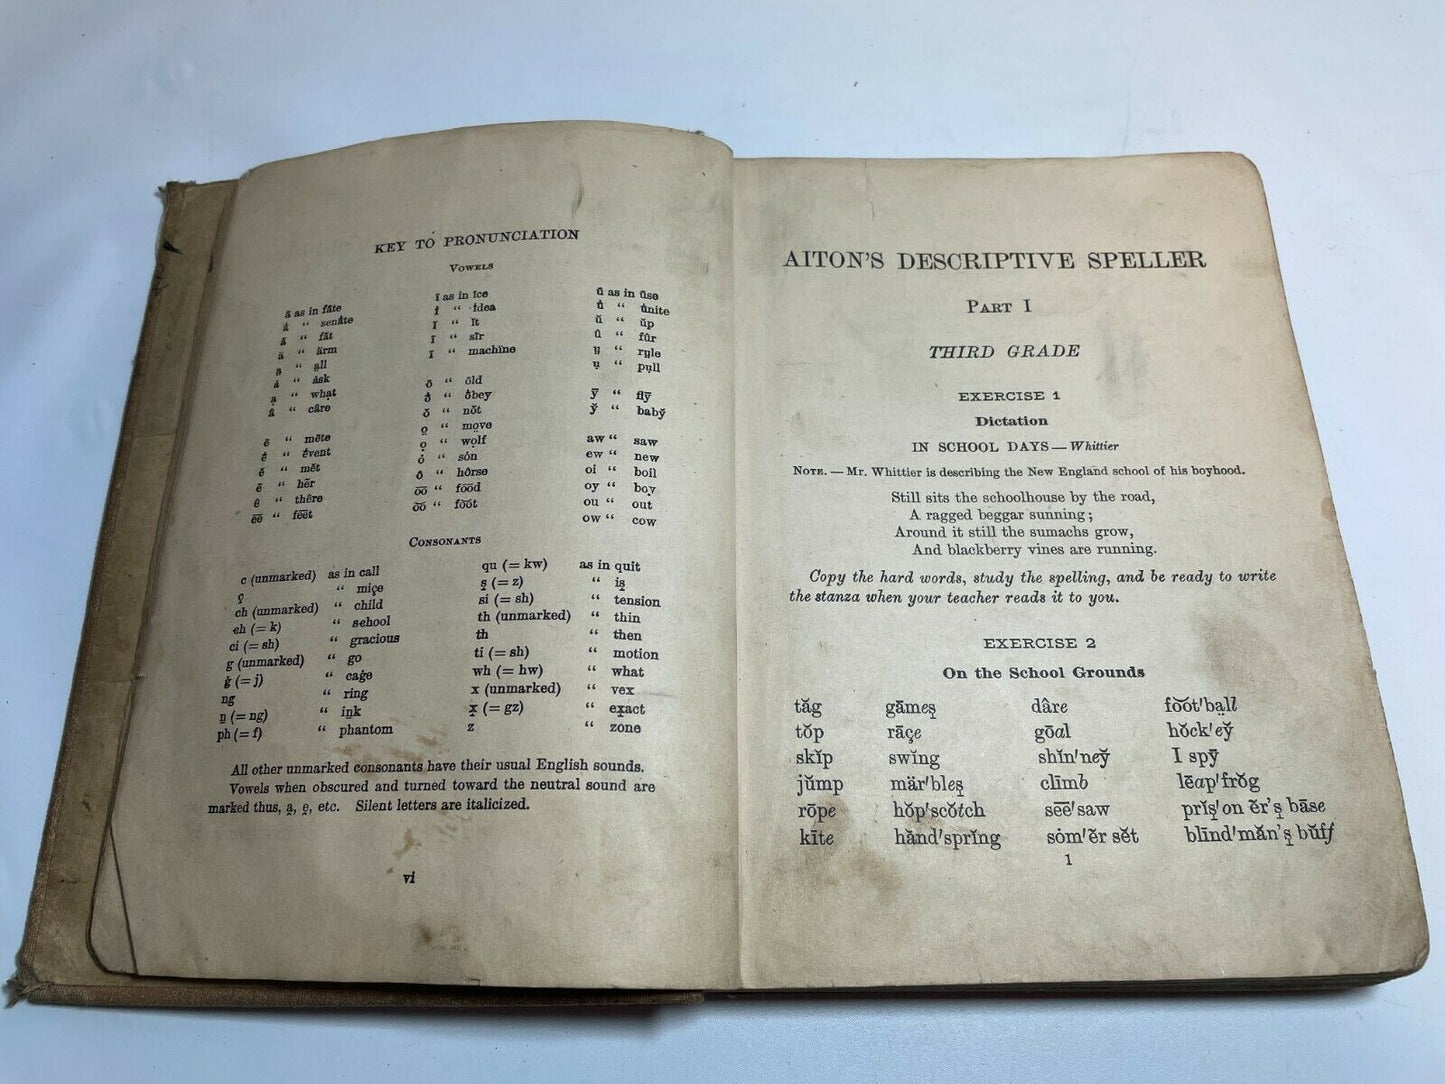 The Descriptive Speller, George Aiton, Gunn & Company Book 1907, (B3)